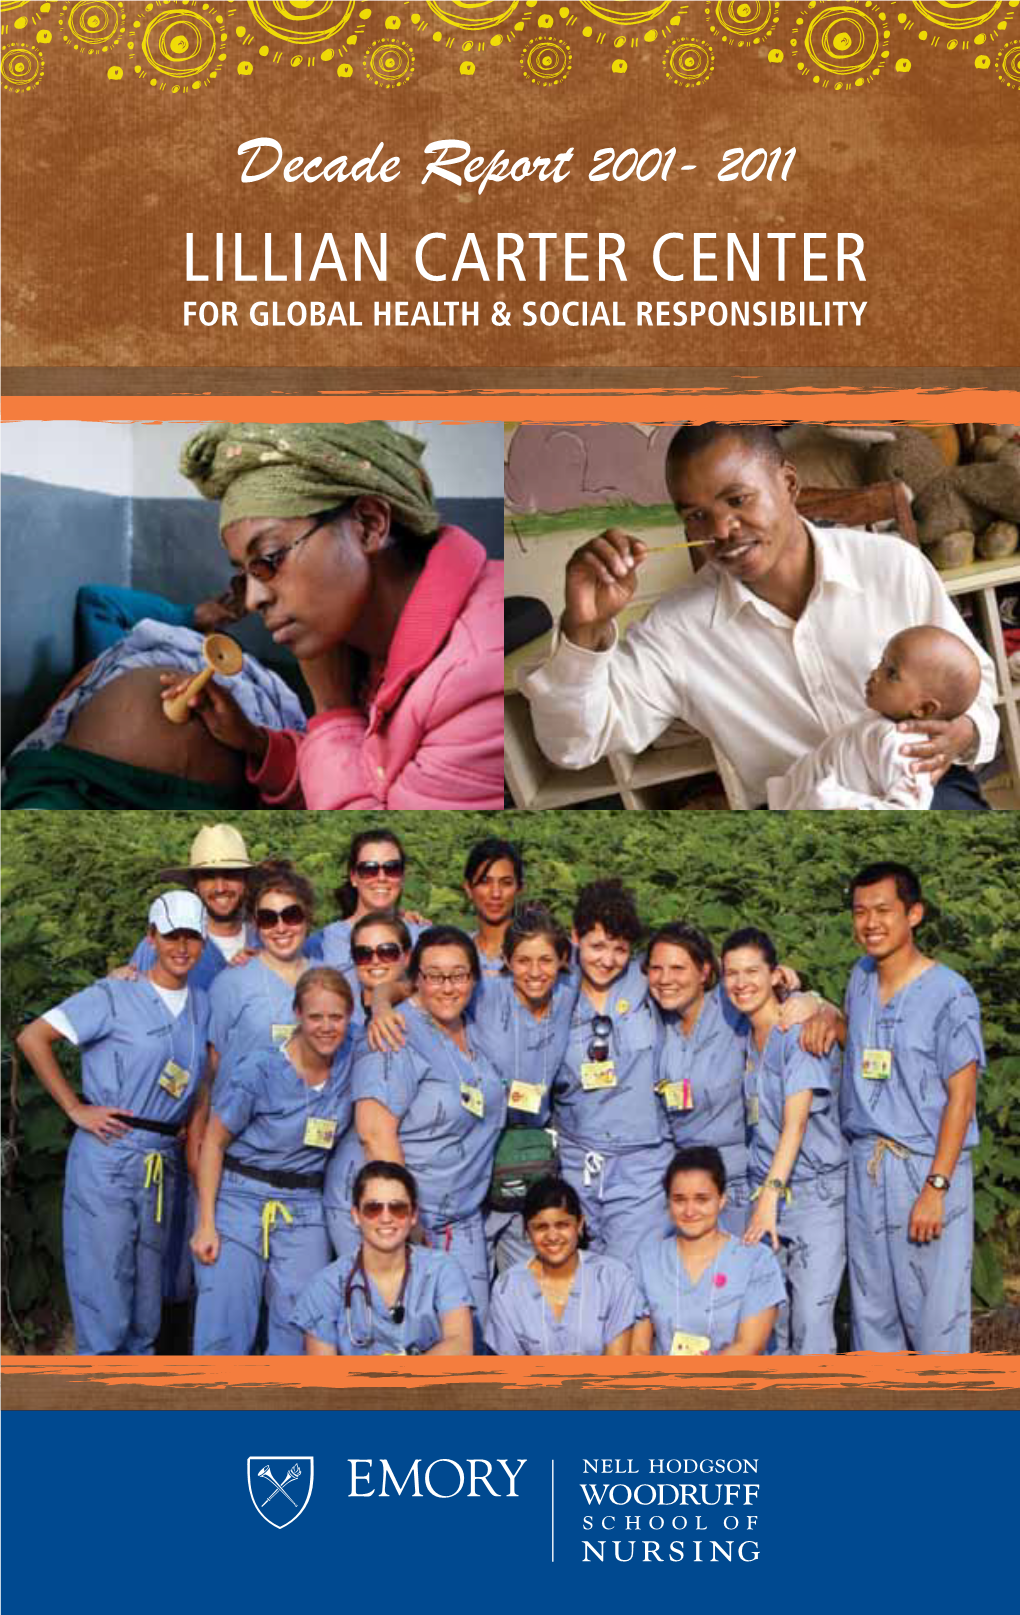 Decade Report 2001- 2011 LILLIAN CARTER CENTER for GLOBAL HEALTH & SOCIAL RESPONSIBILITY